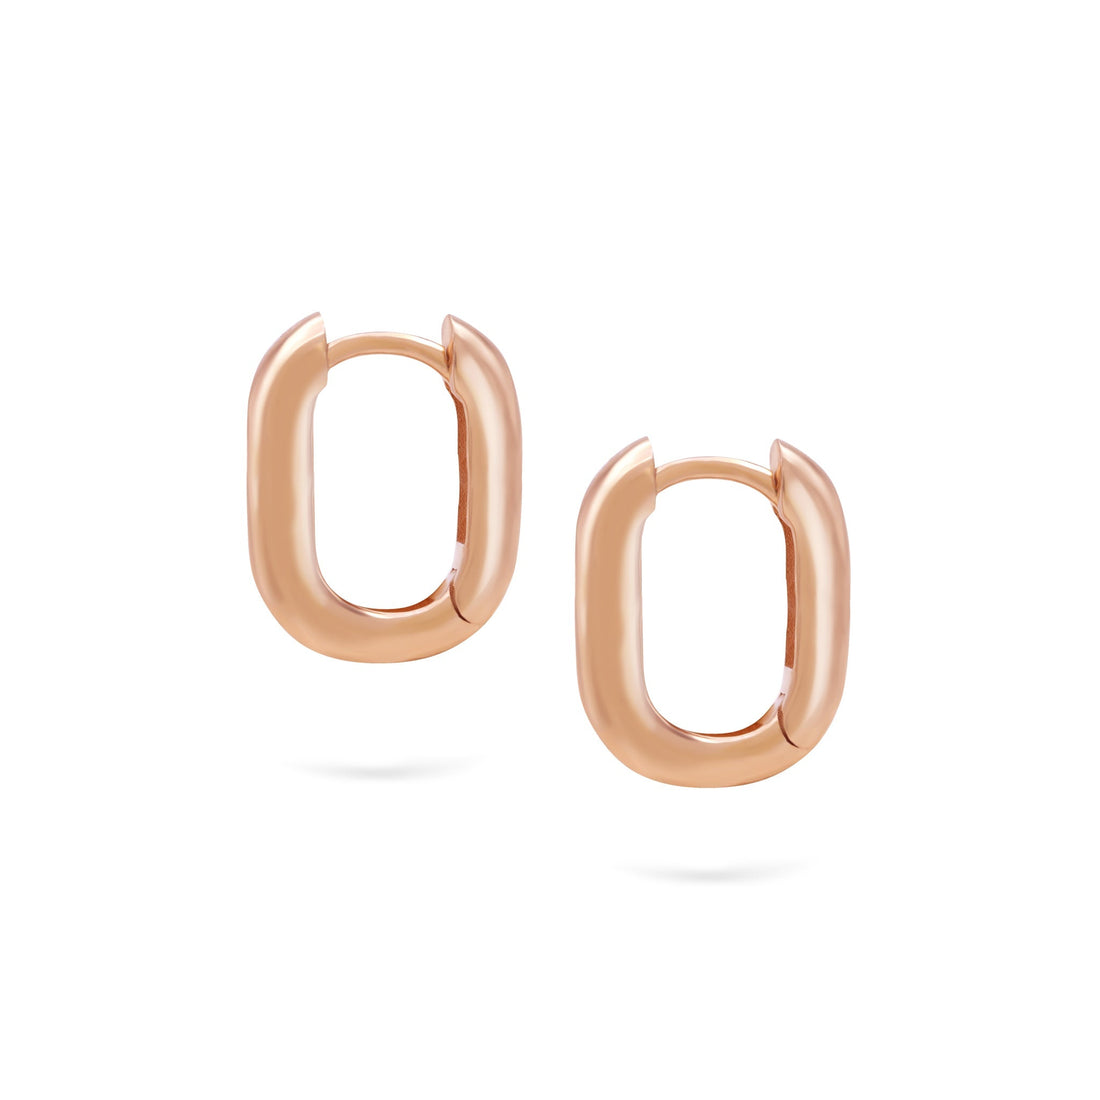 Jewelry Curved Goldens Hoops | Medium Gold Earrings | 14K - earrings Zengoda Shop online from Artisan Brands